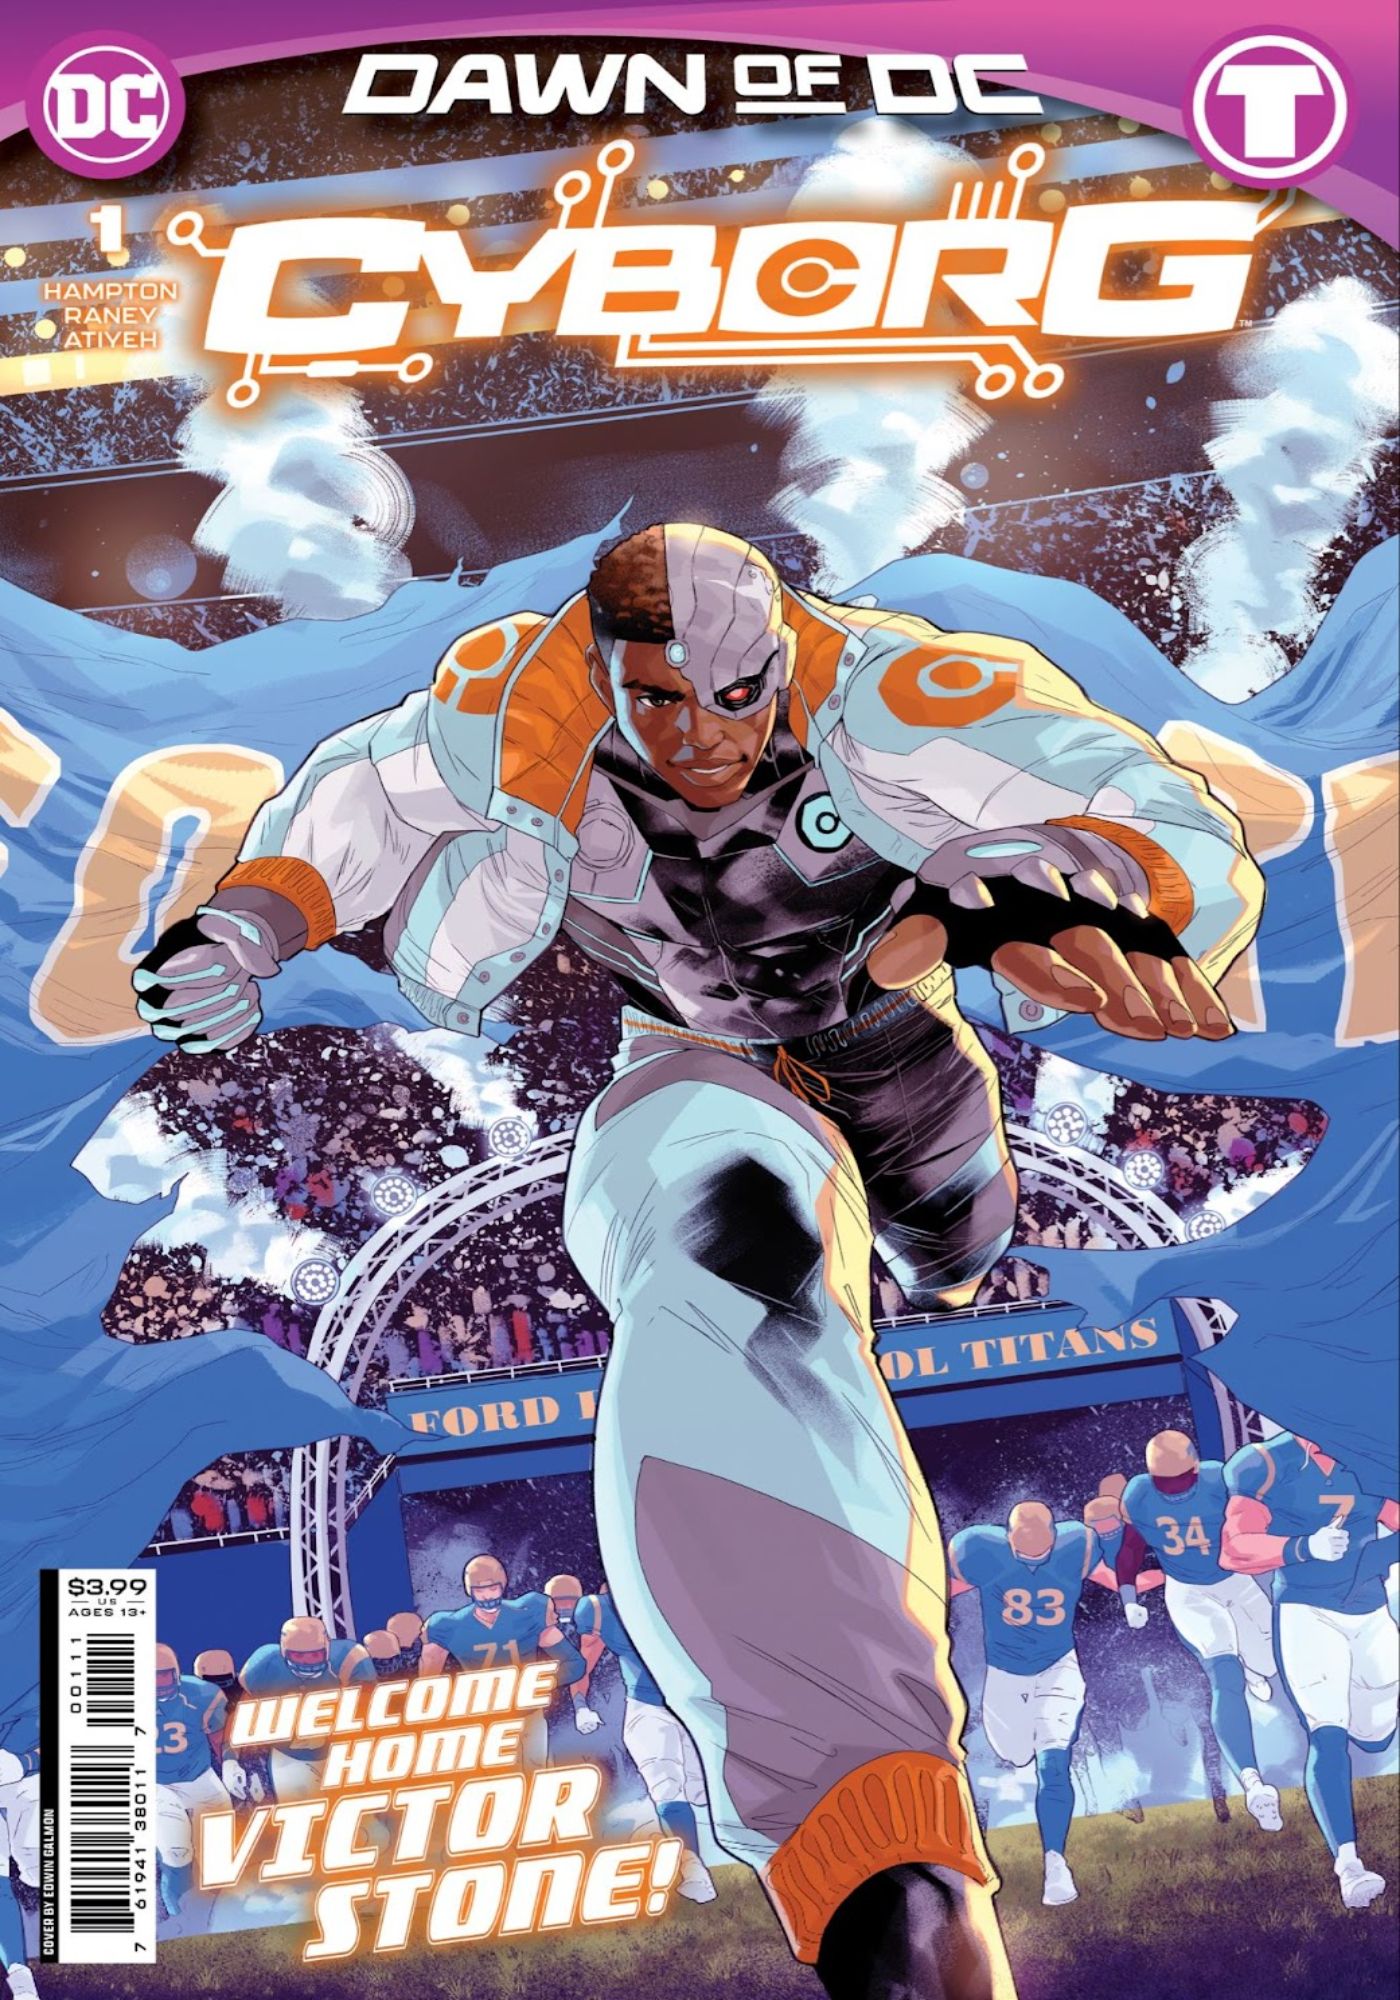 Cyborg New Look DC Comics (1)